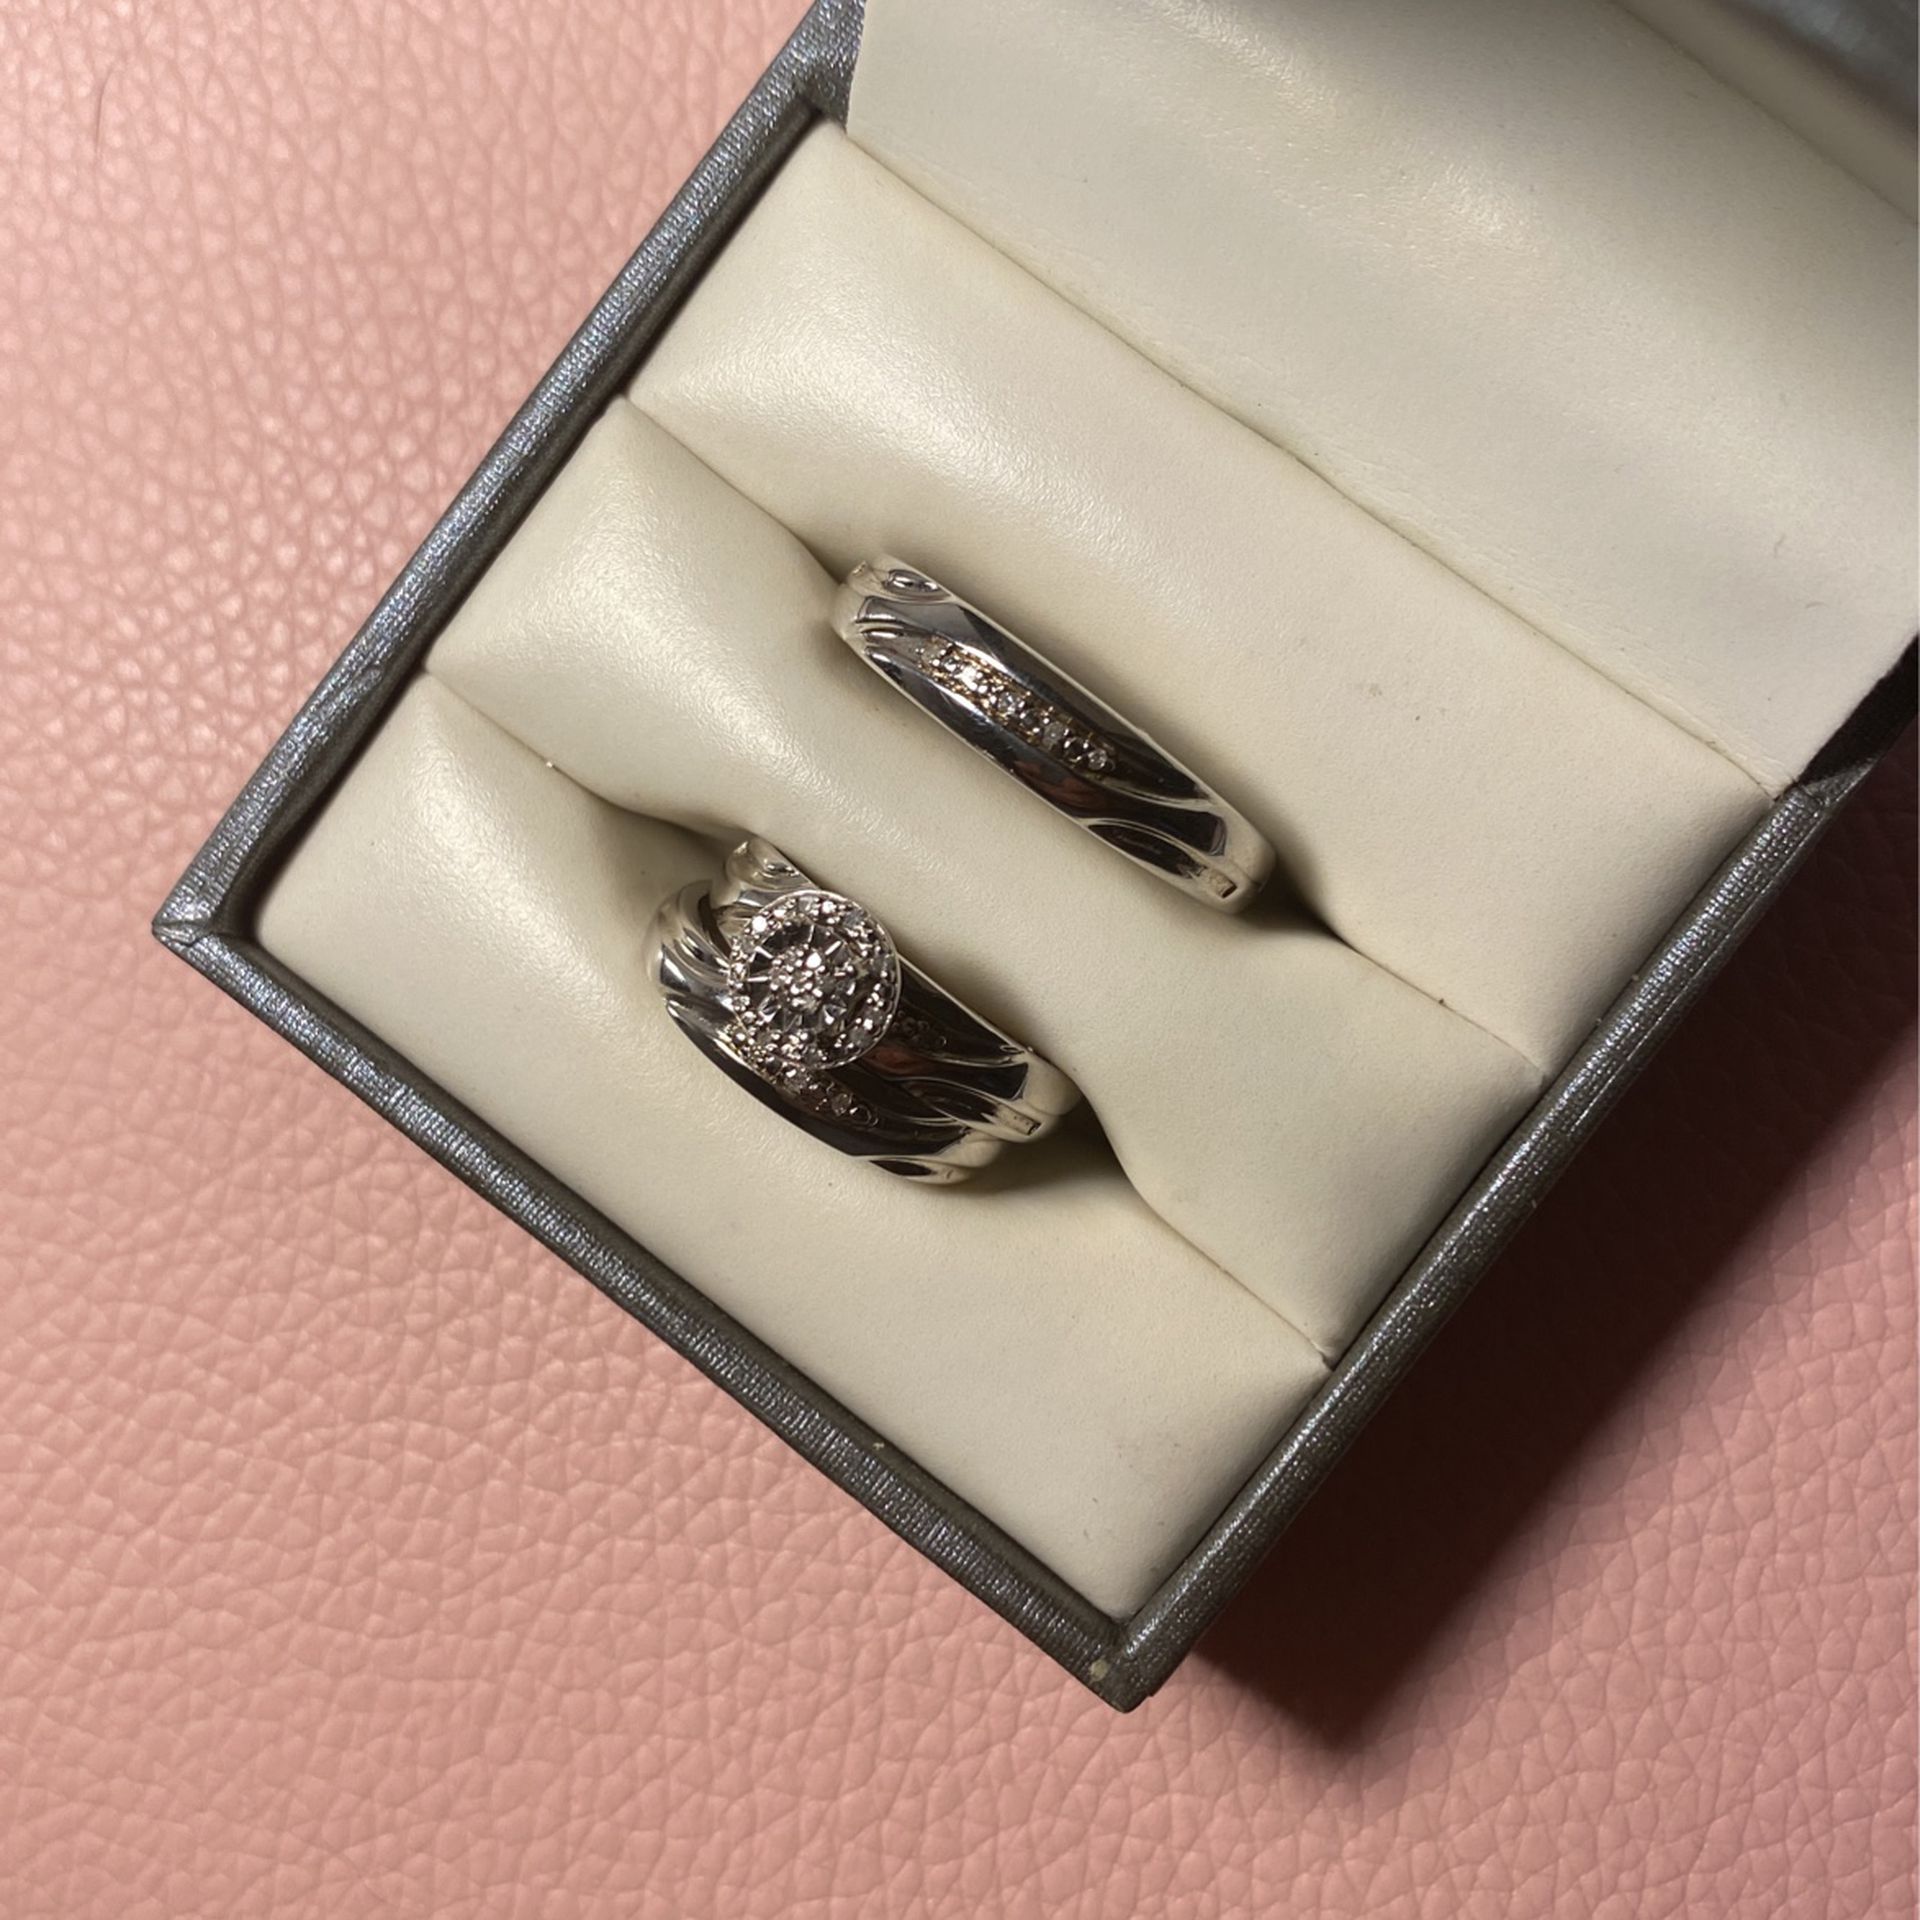 Brand new silver wedding ring set